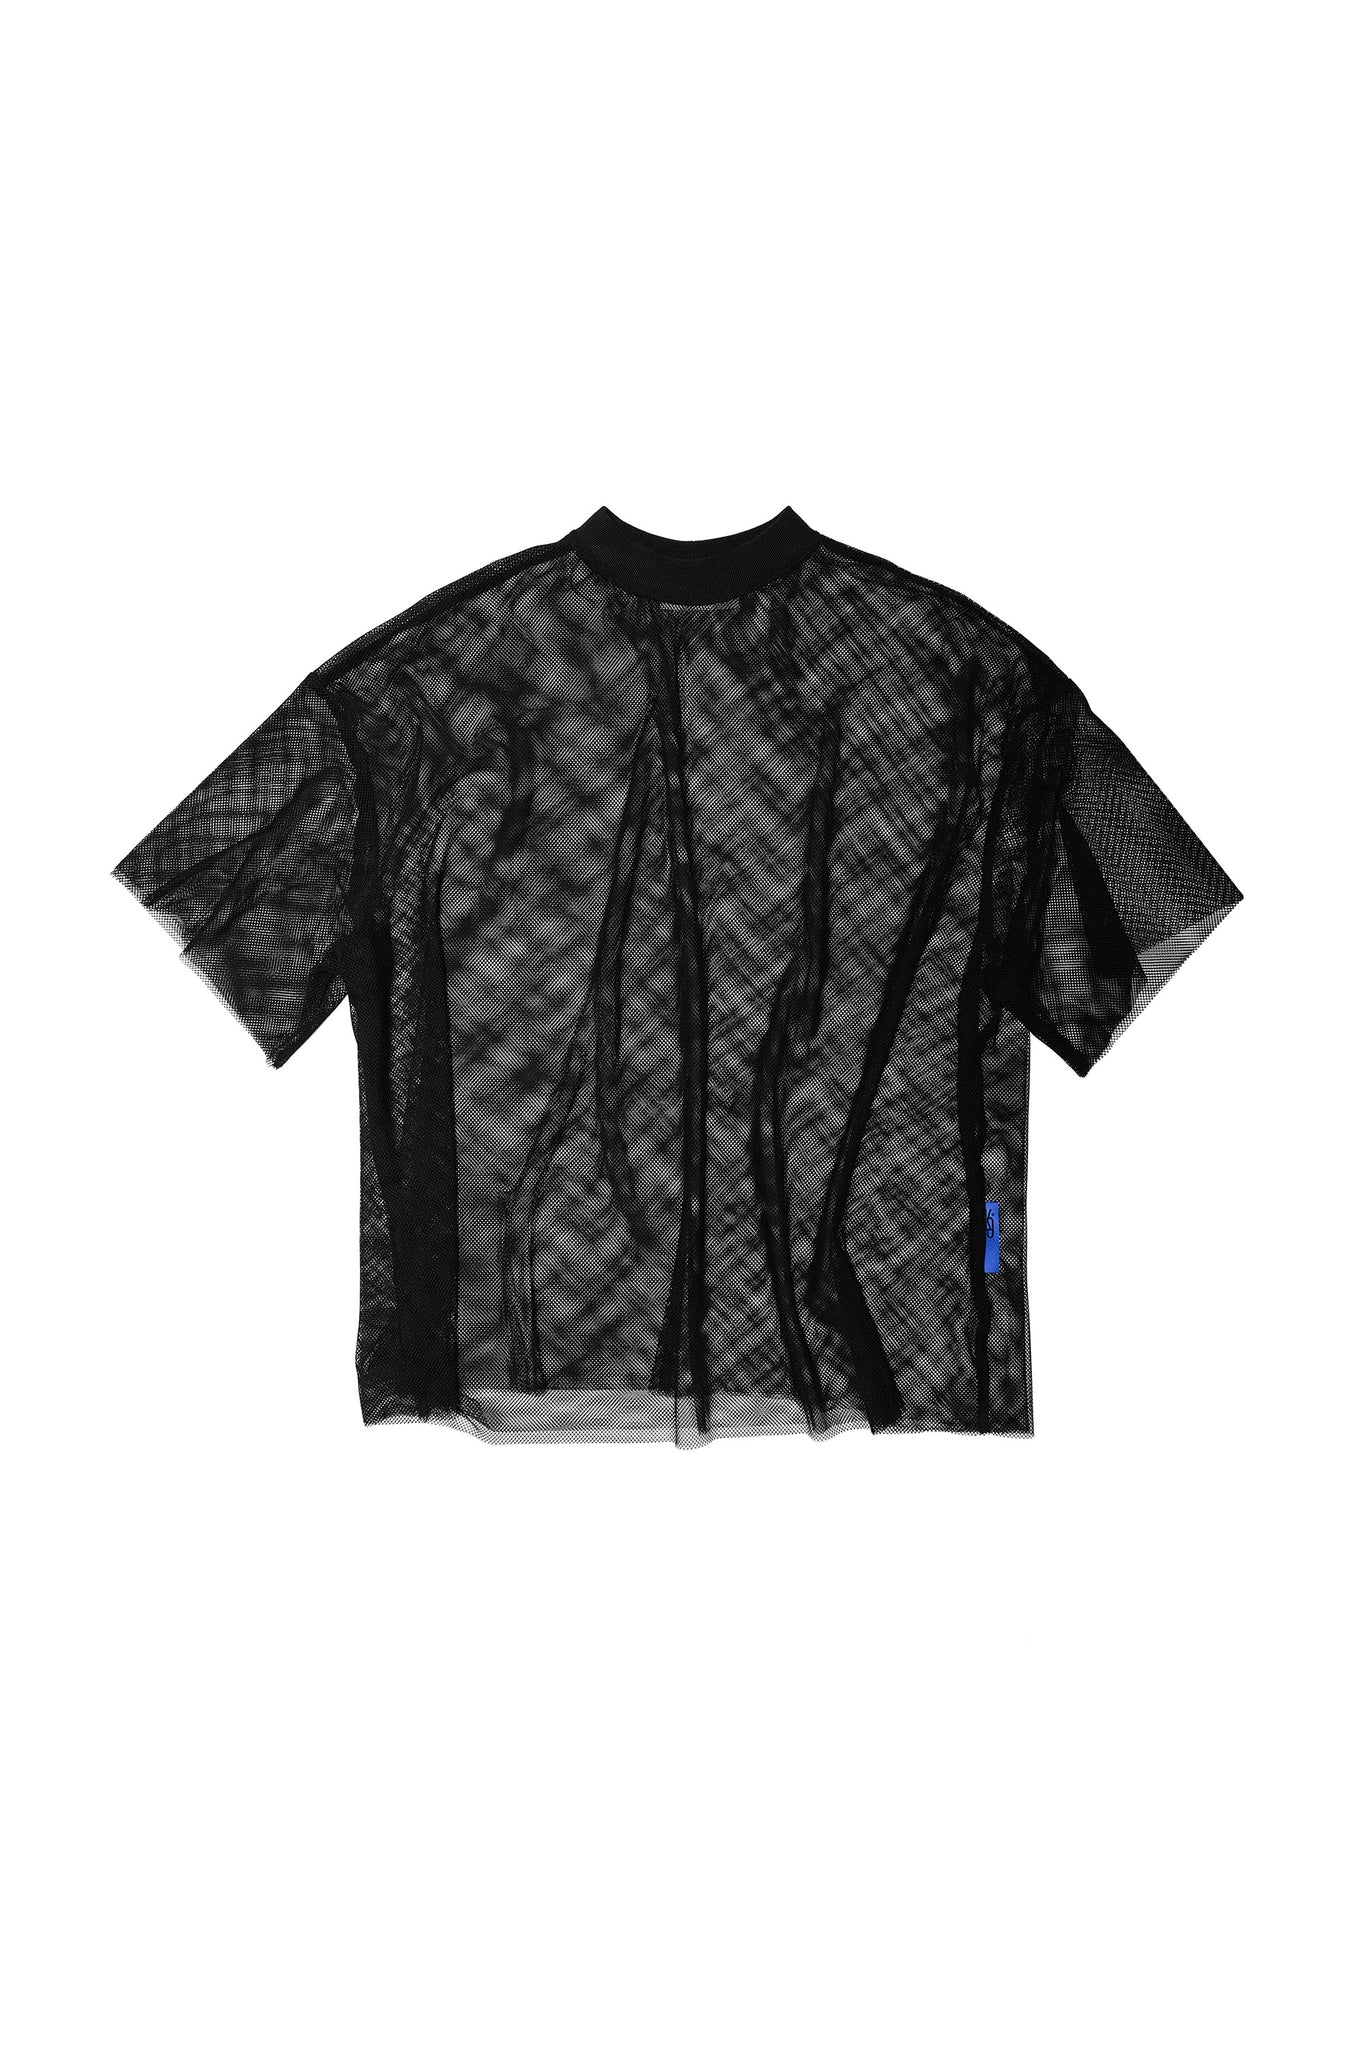 Black Fishnet T-shirt